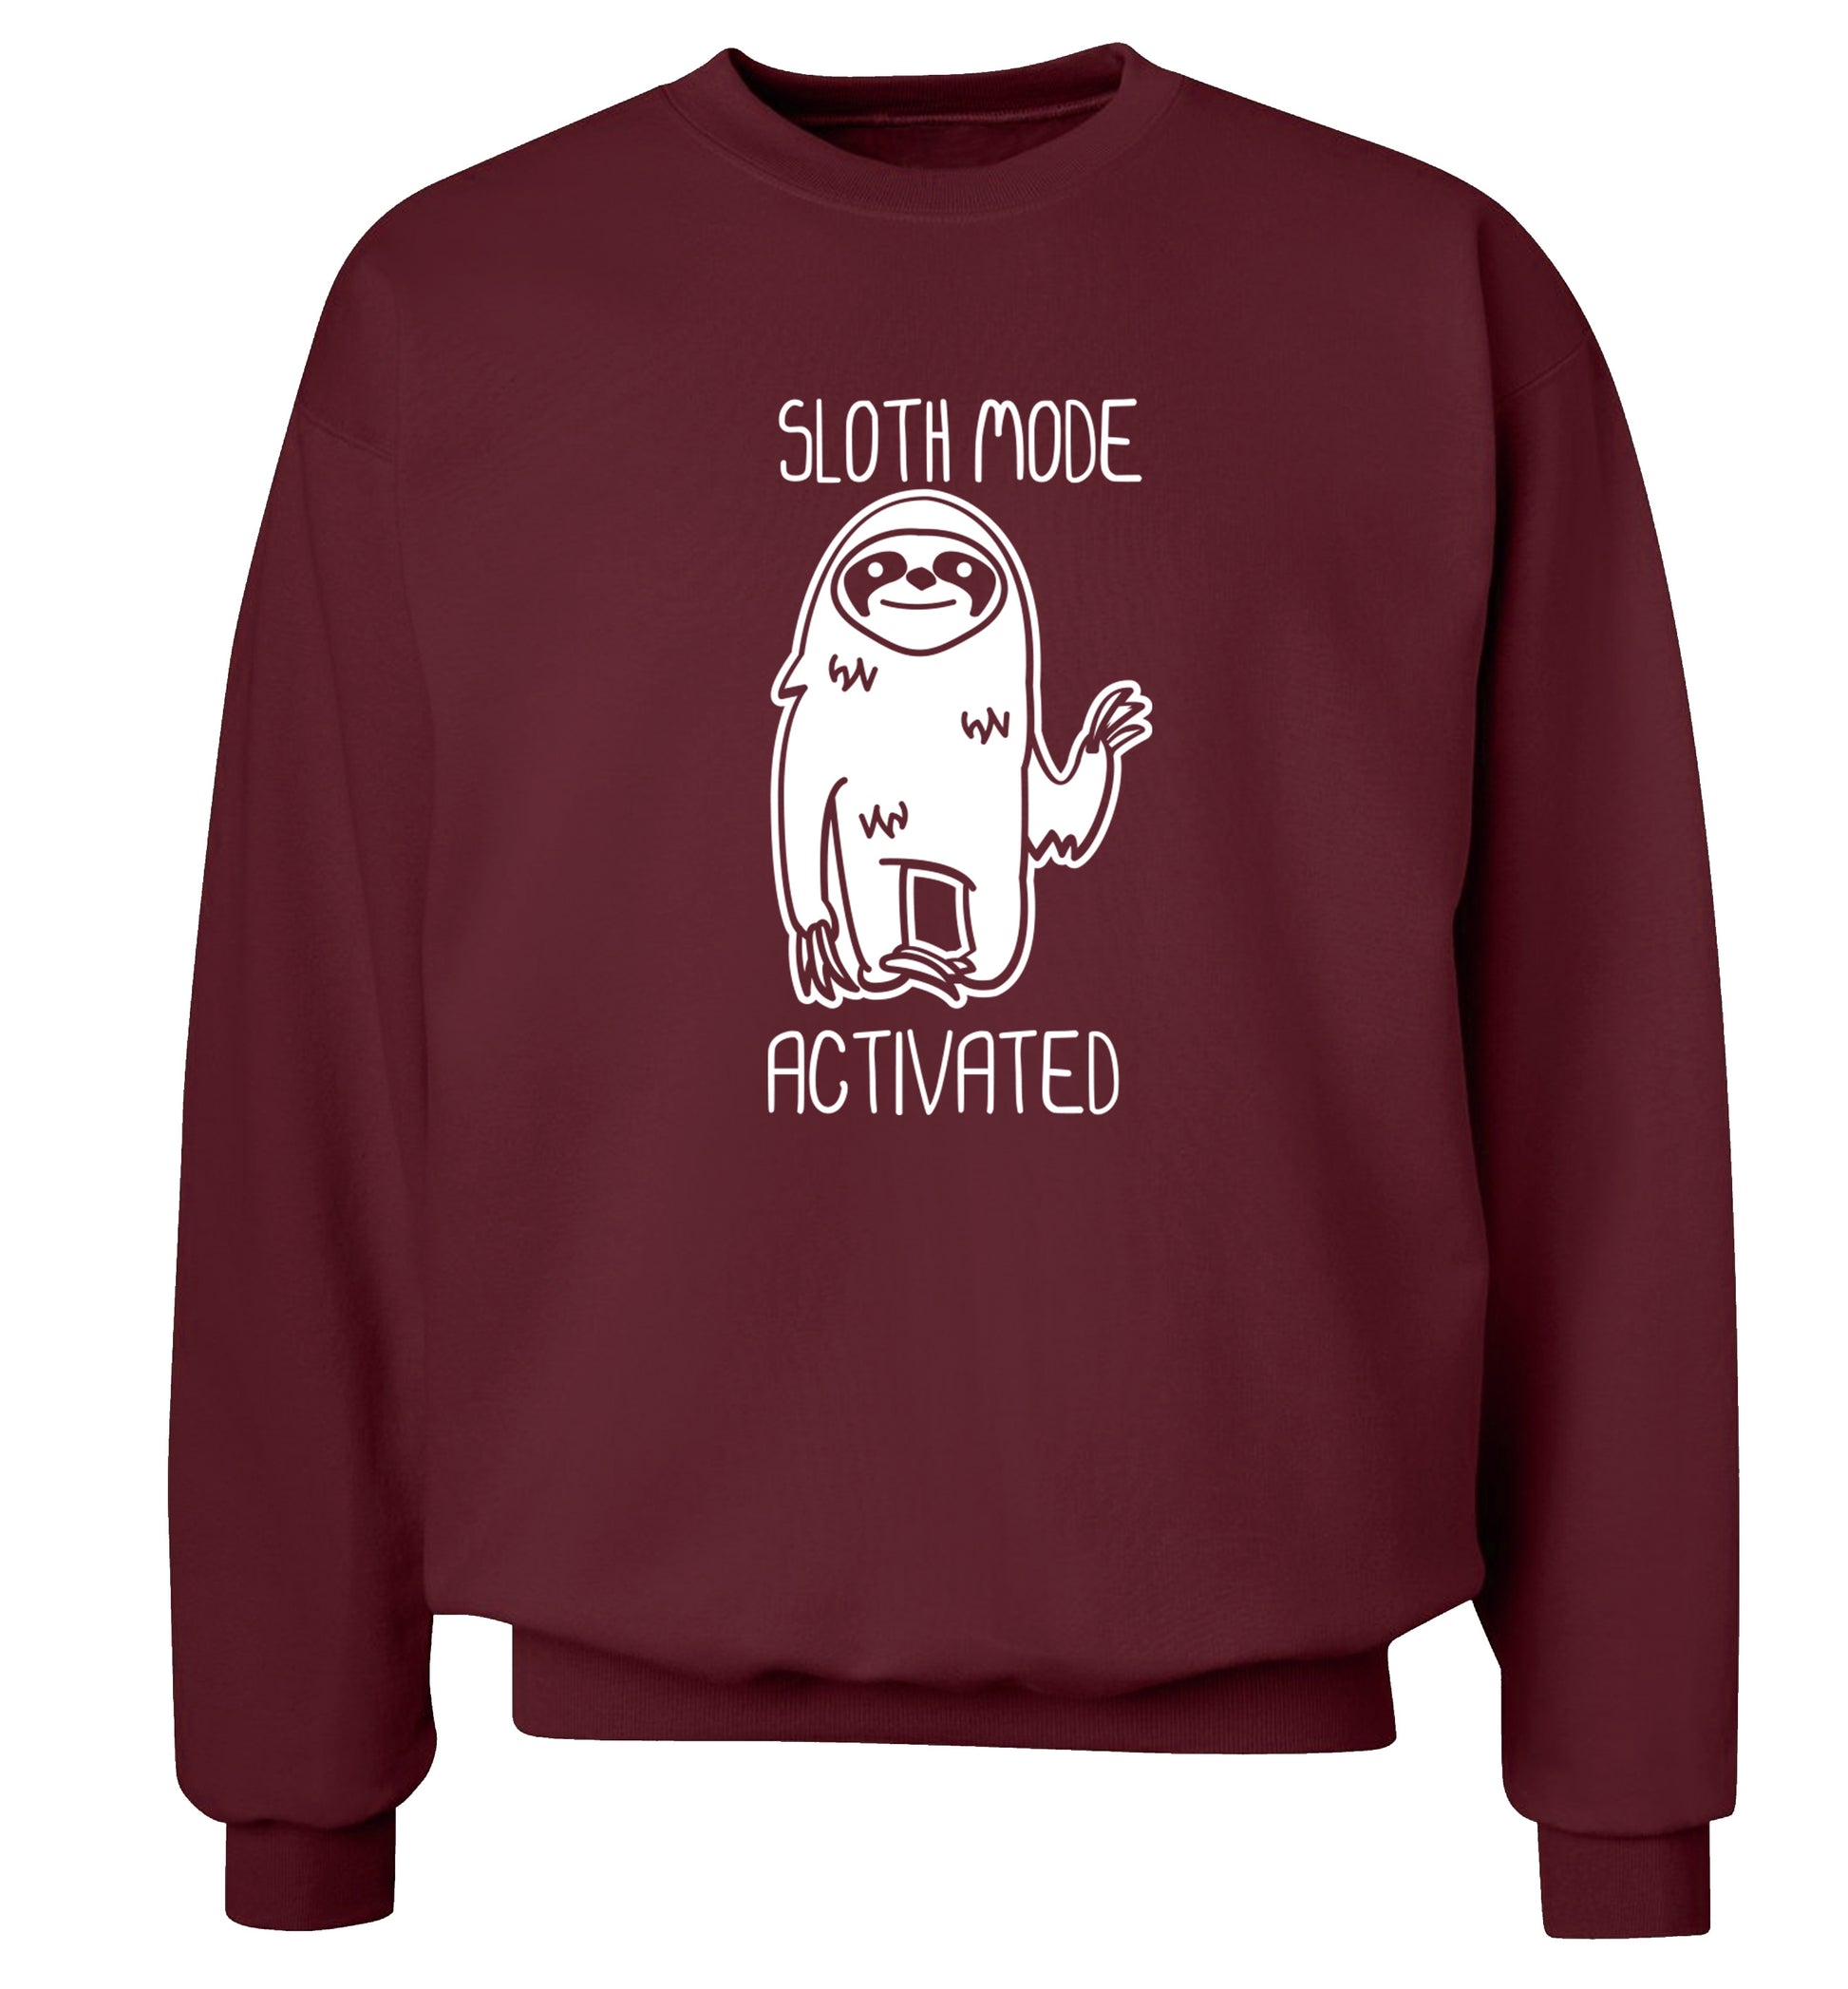 Sloth mode acitvated Adult's unisex maroon Sweater 2XL